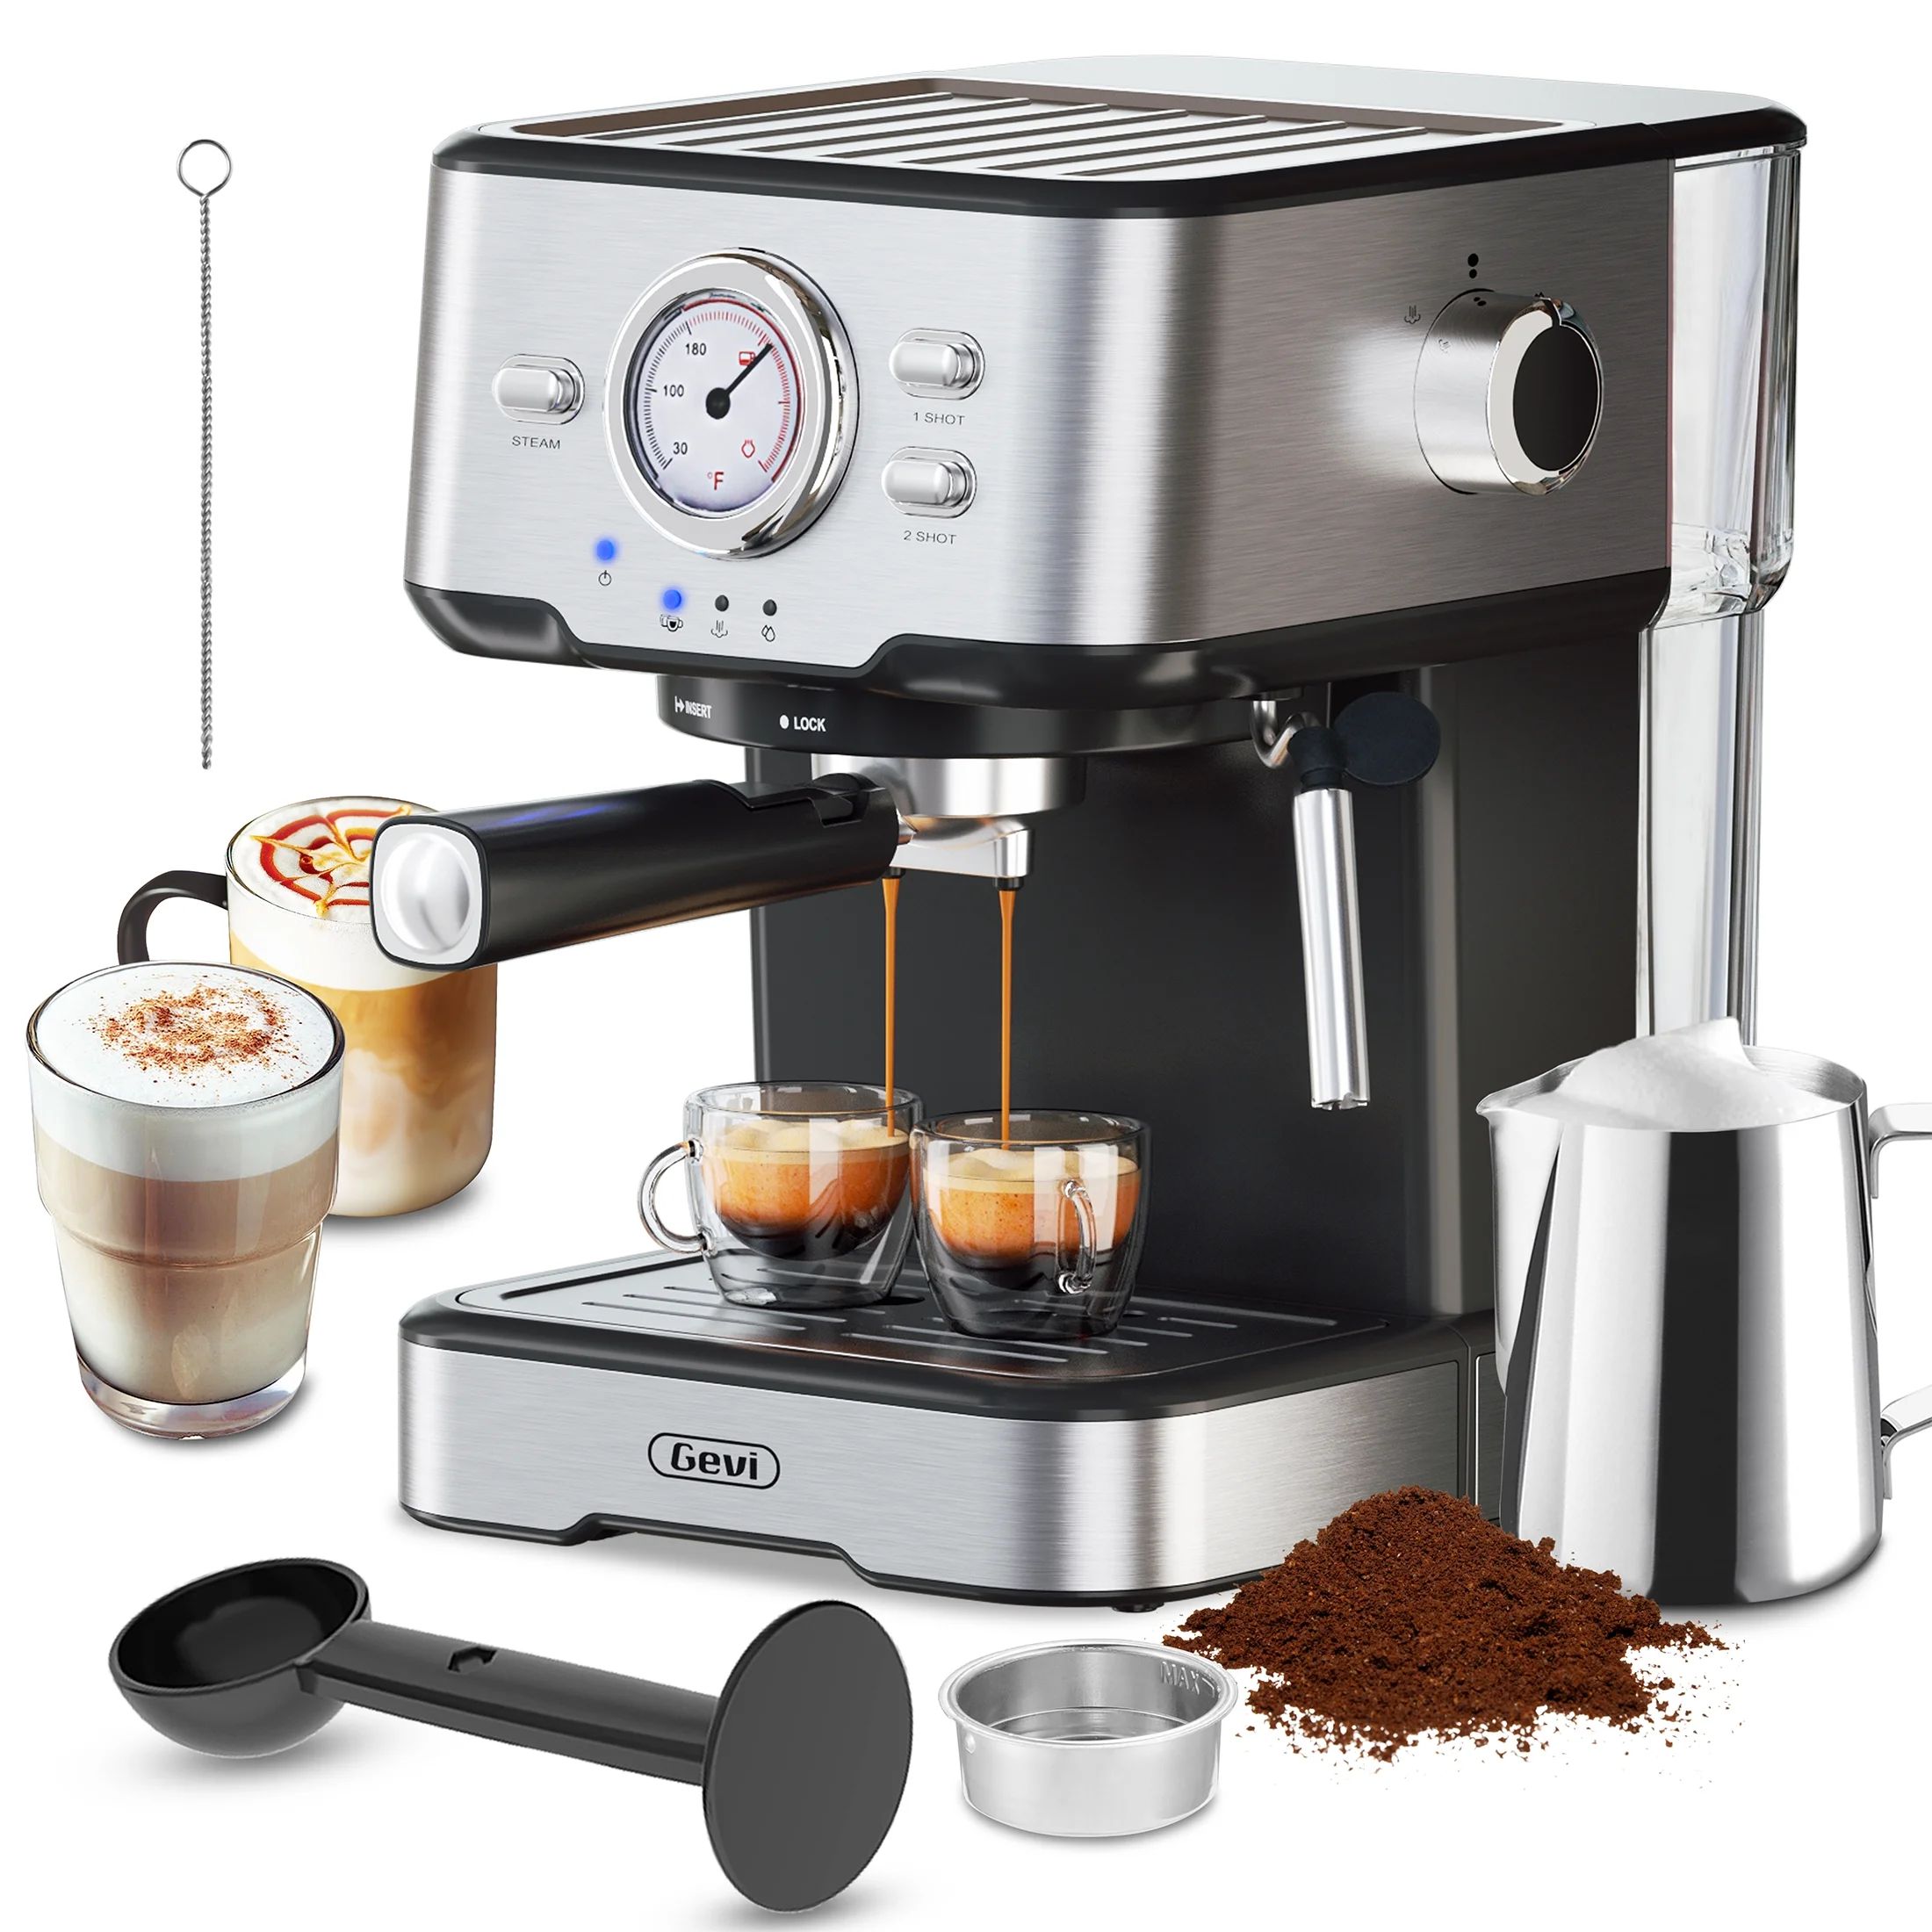 Gevi Espresso Machine with Steamer 15 Bar Cappuccino Coffee Maker for Latte Mocha | Walmart (US)